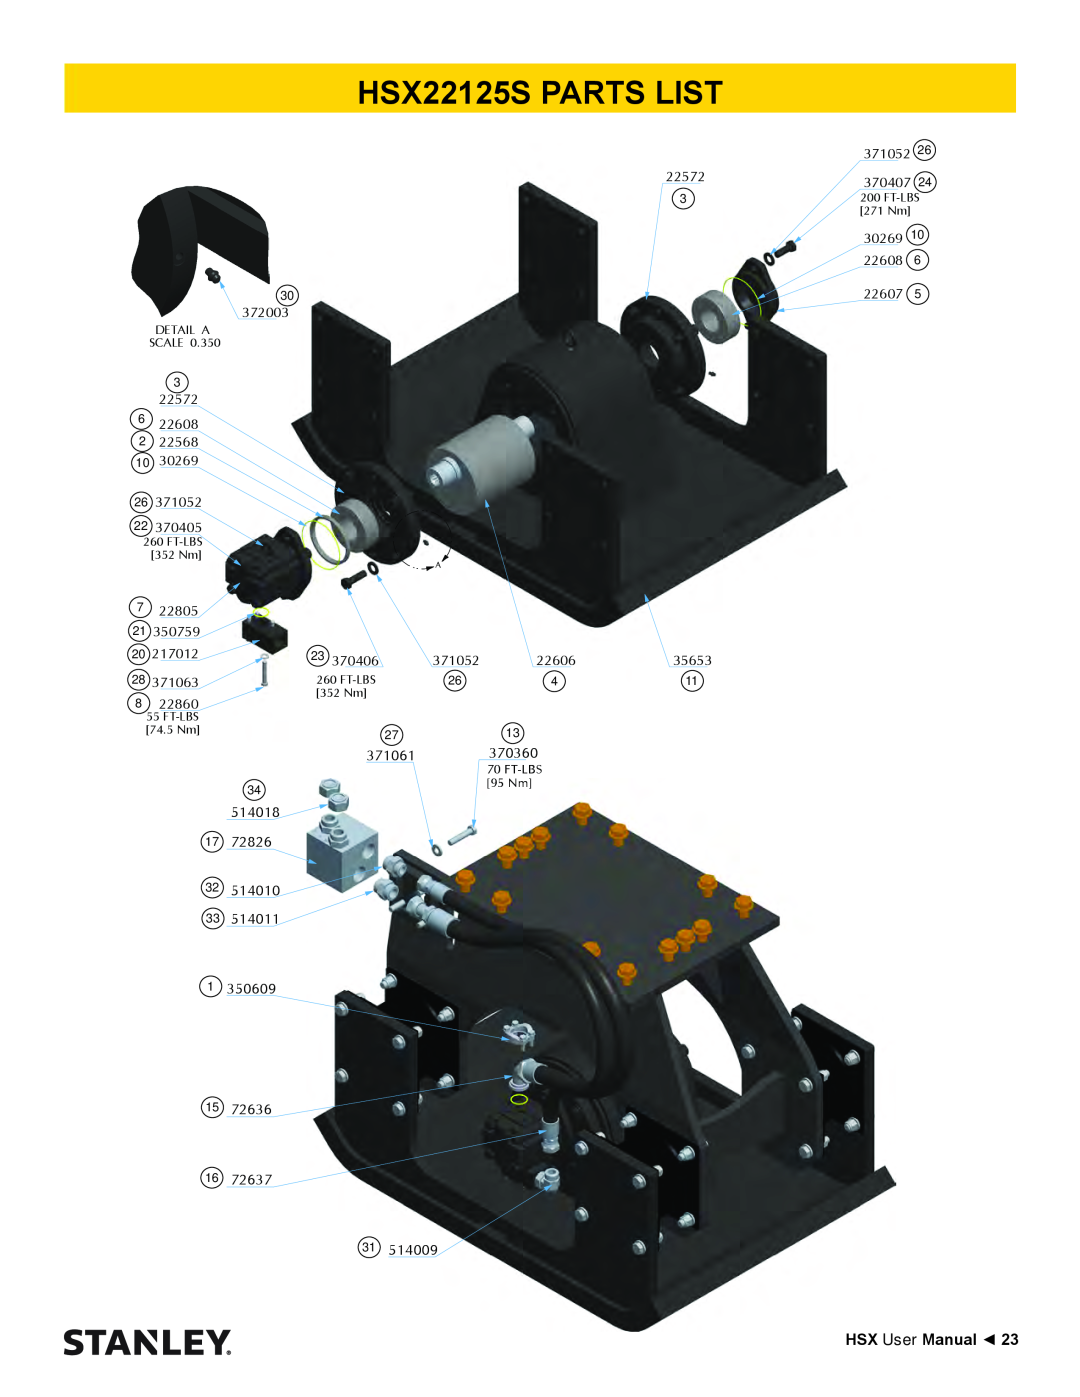 Stanley Black & Decker HSX SERIES user manual HSX22125S PARTS LIST, Detail A Scale, FT-LBS 352 Nm, Ft-Lbs, 74.5 Nm, 95 Nm 